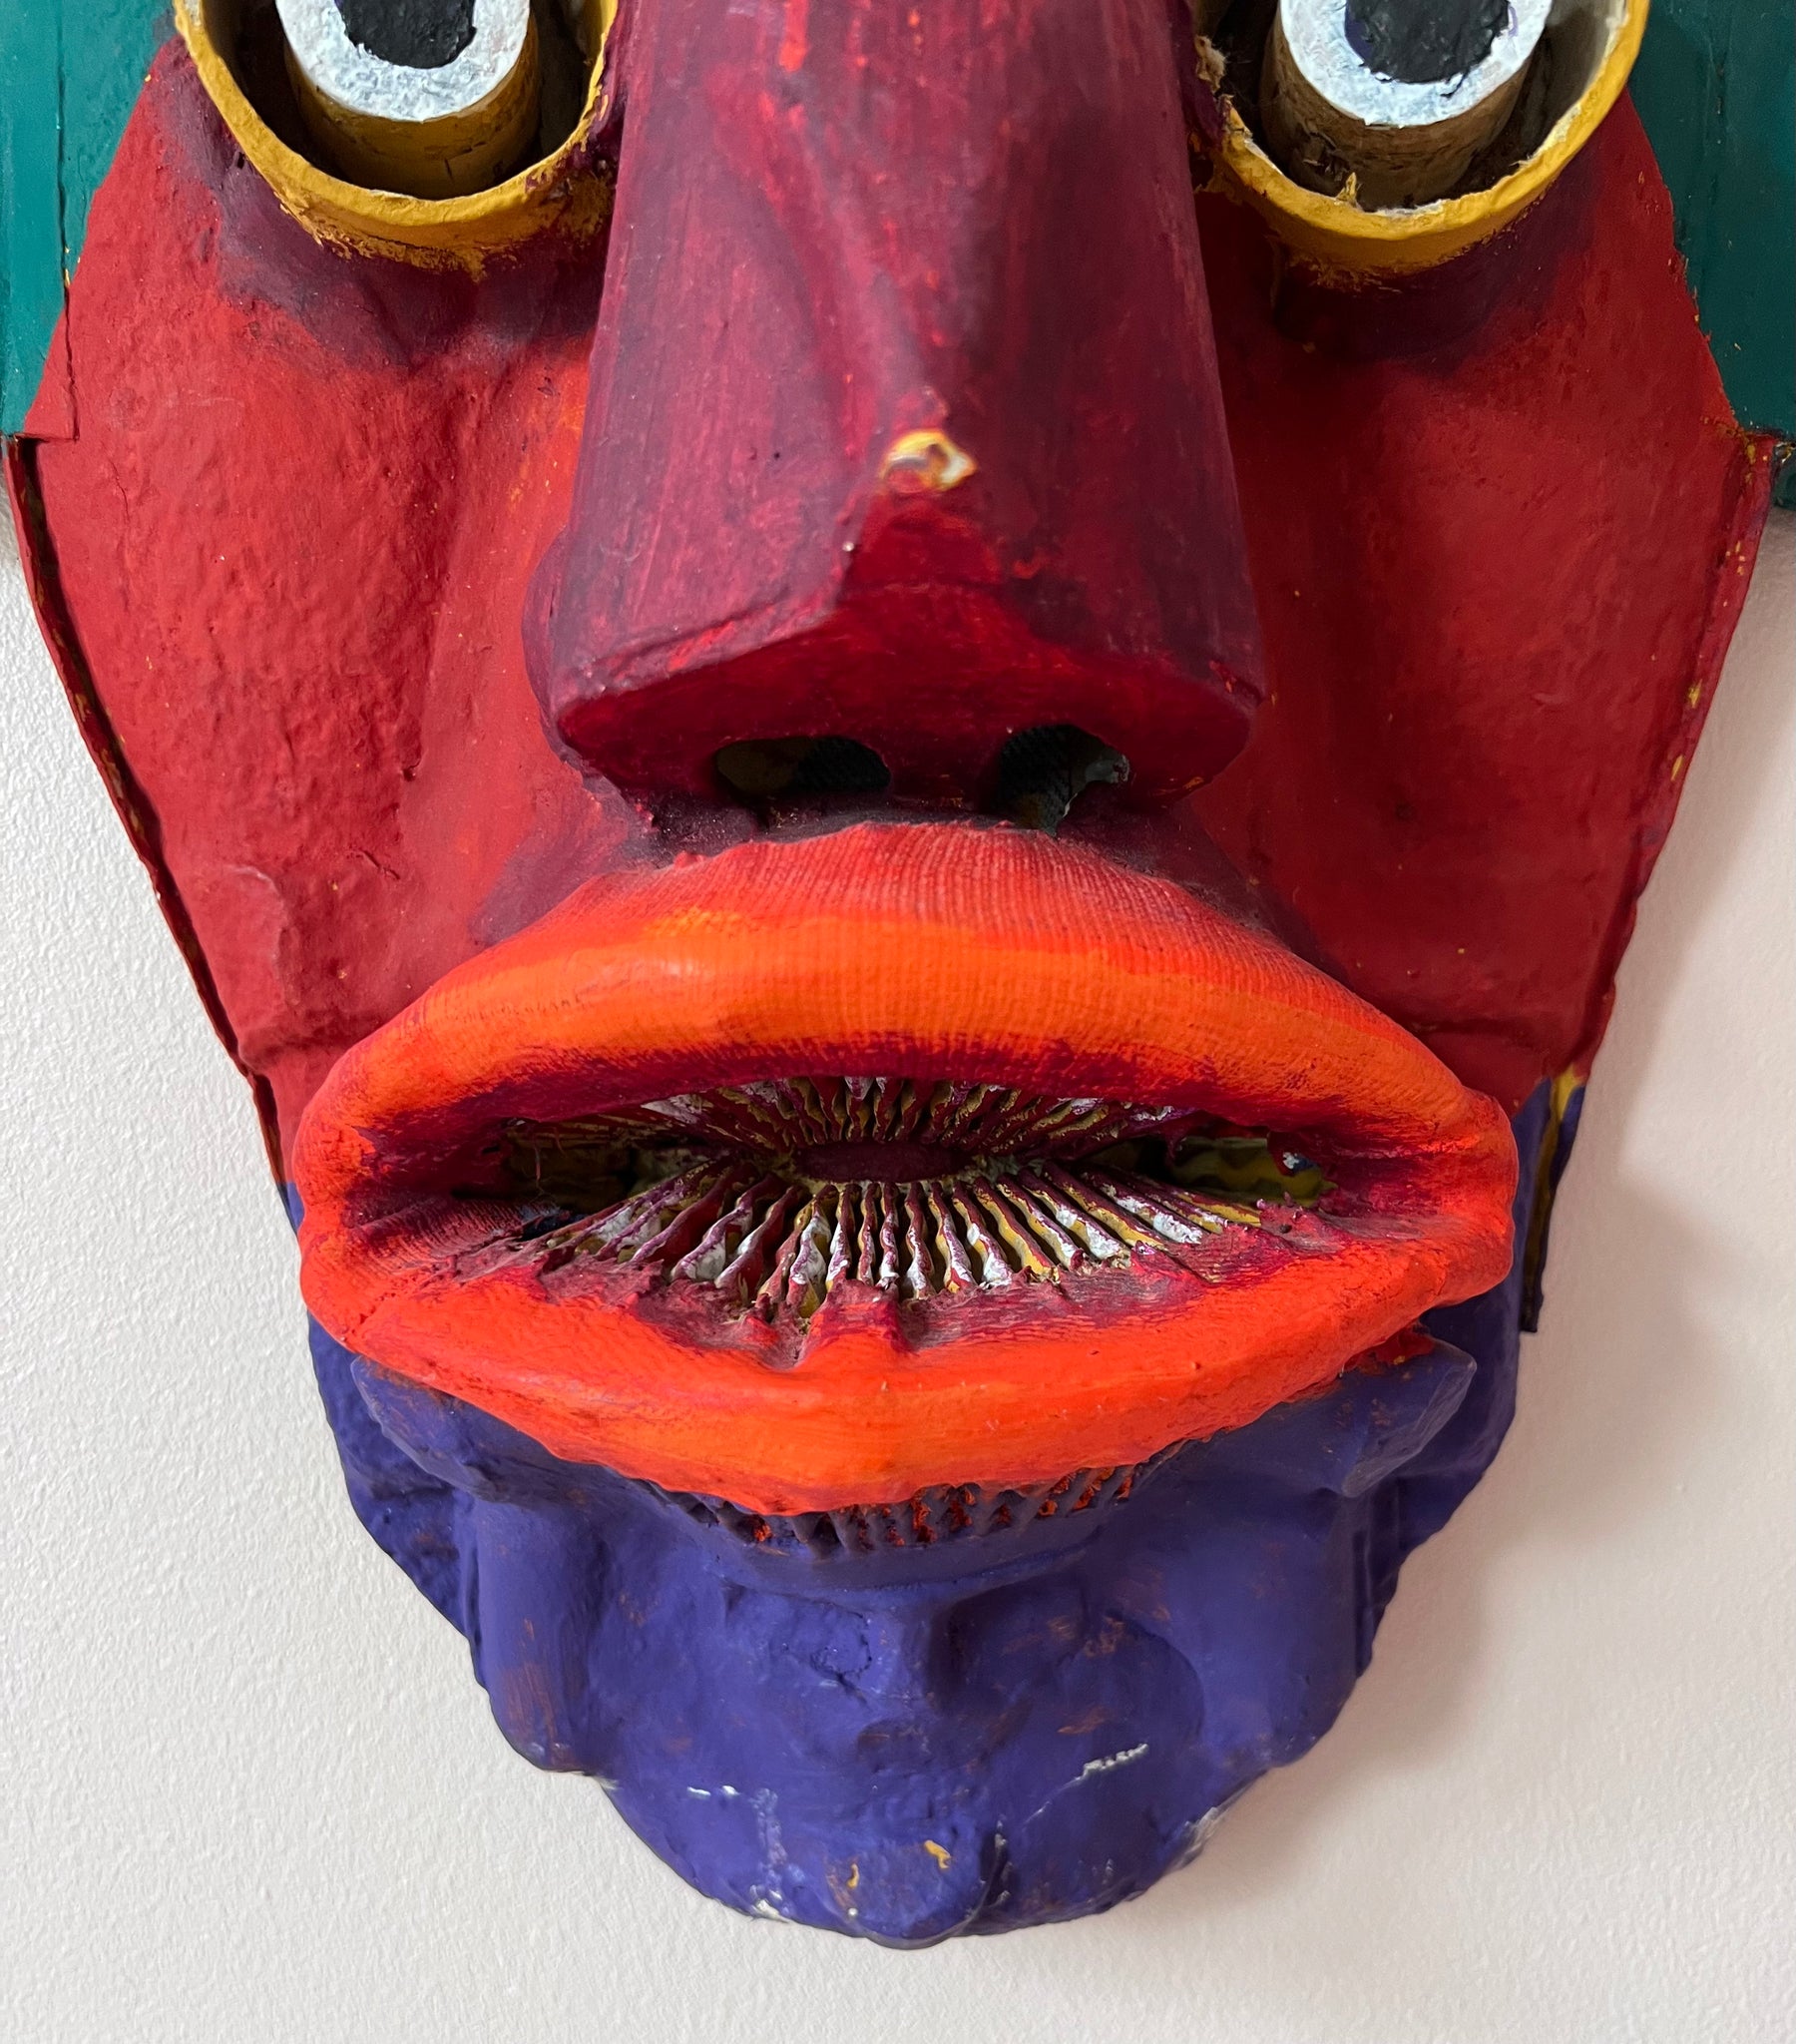 Sculptural Wall Hanging Mask